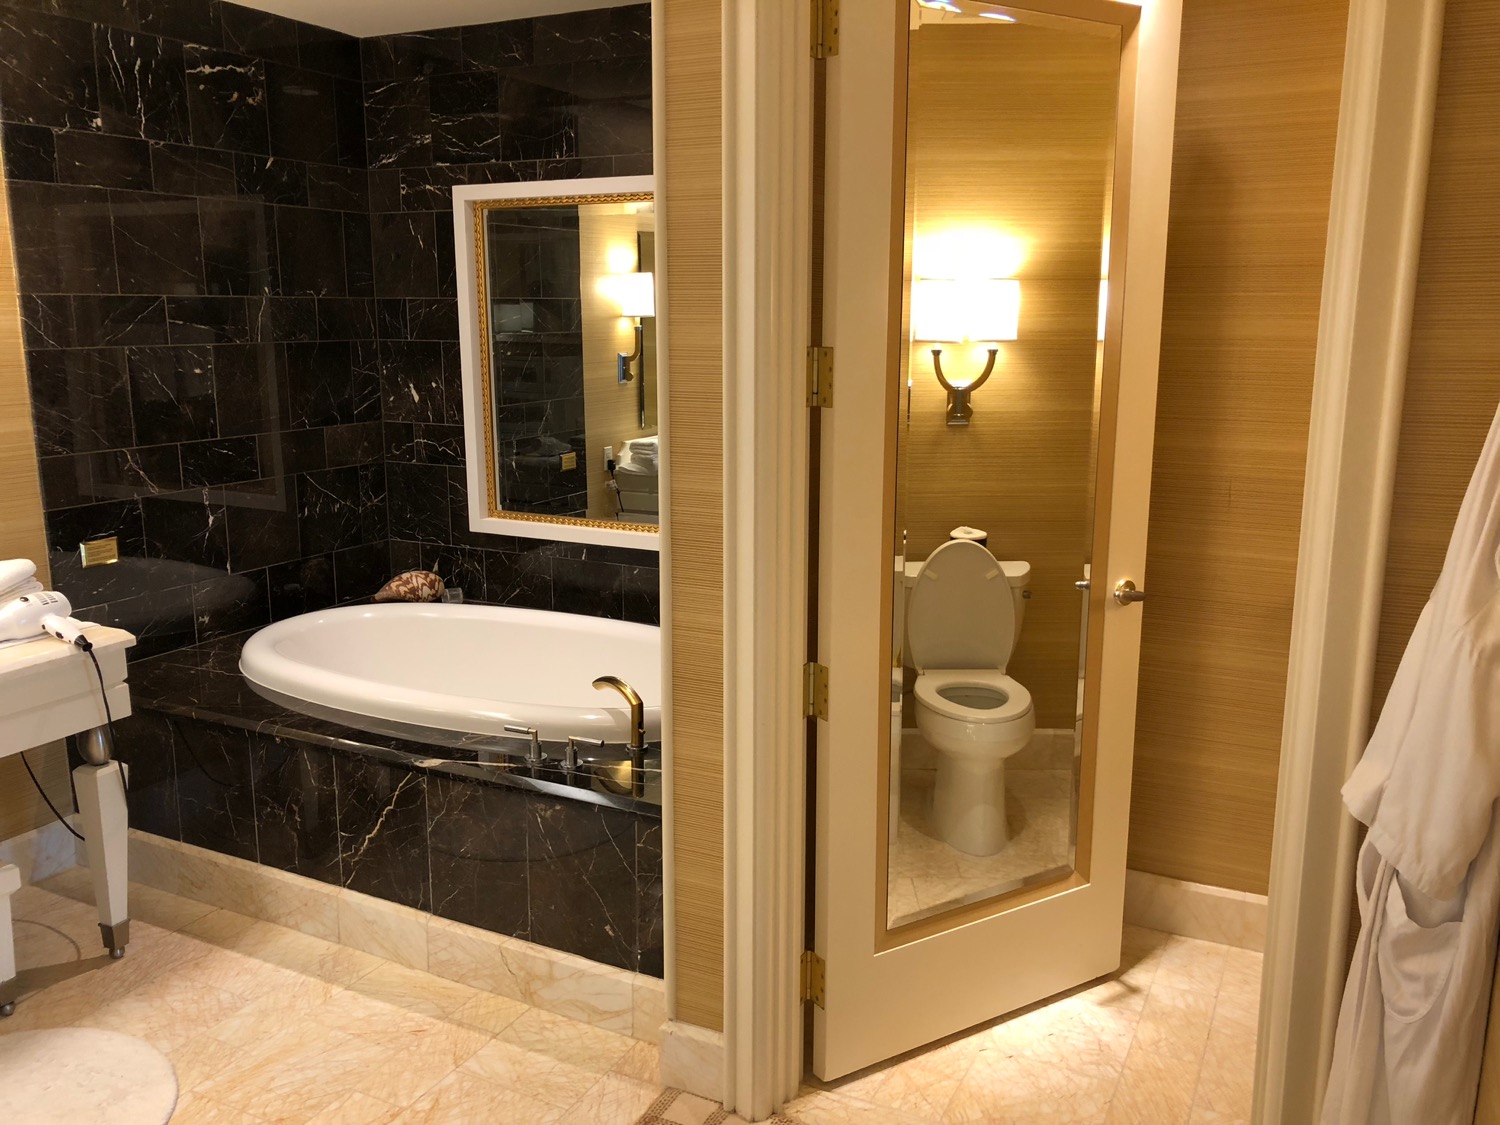 a bathroom with a bathtub and a mirror